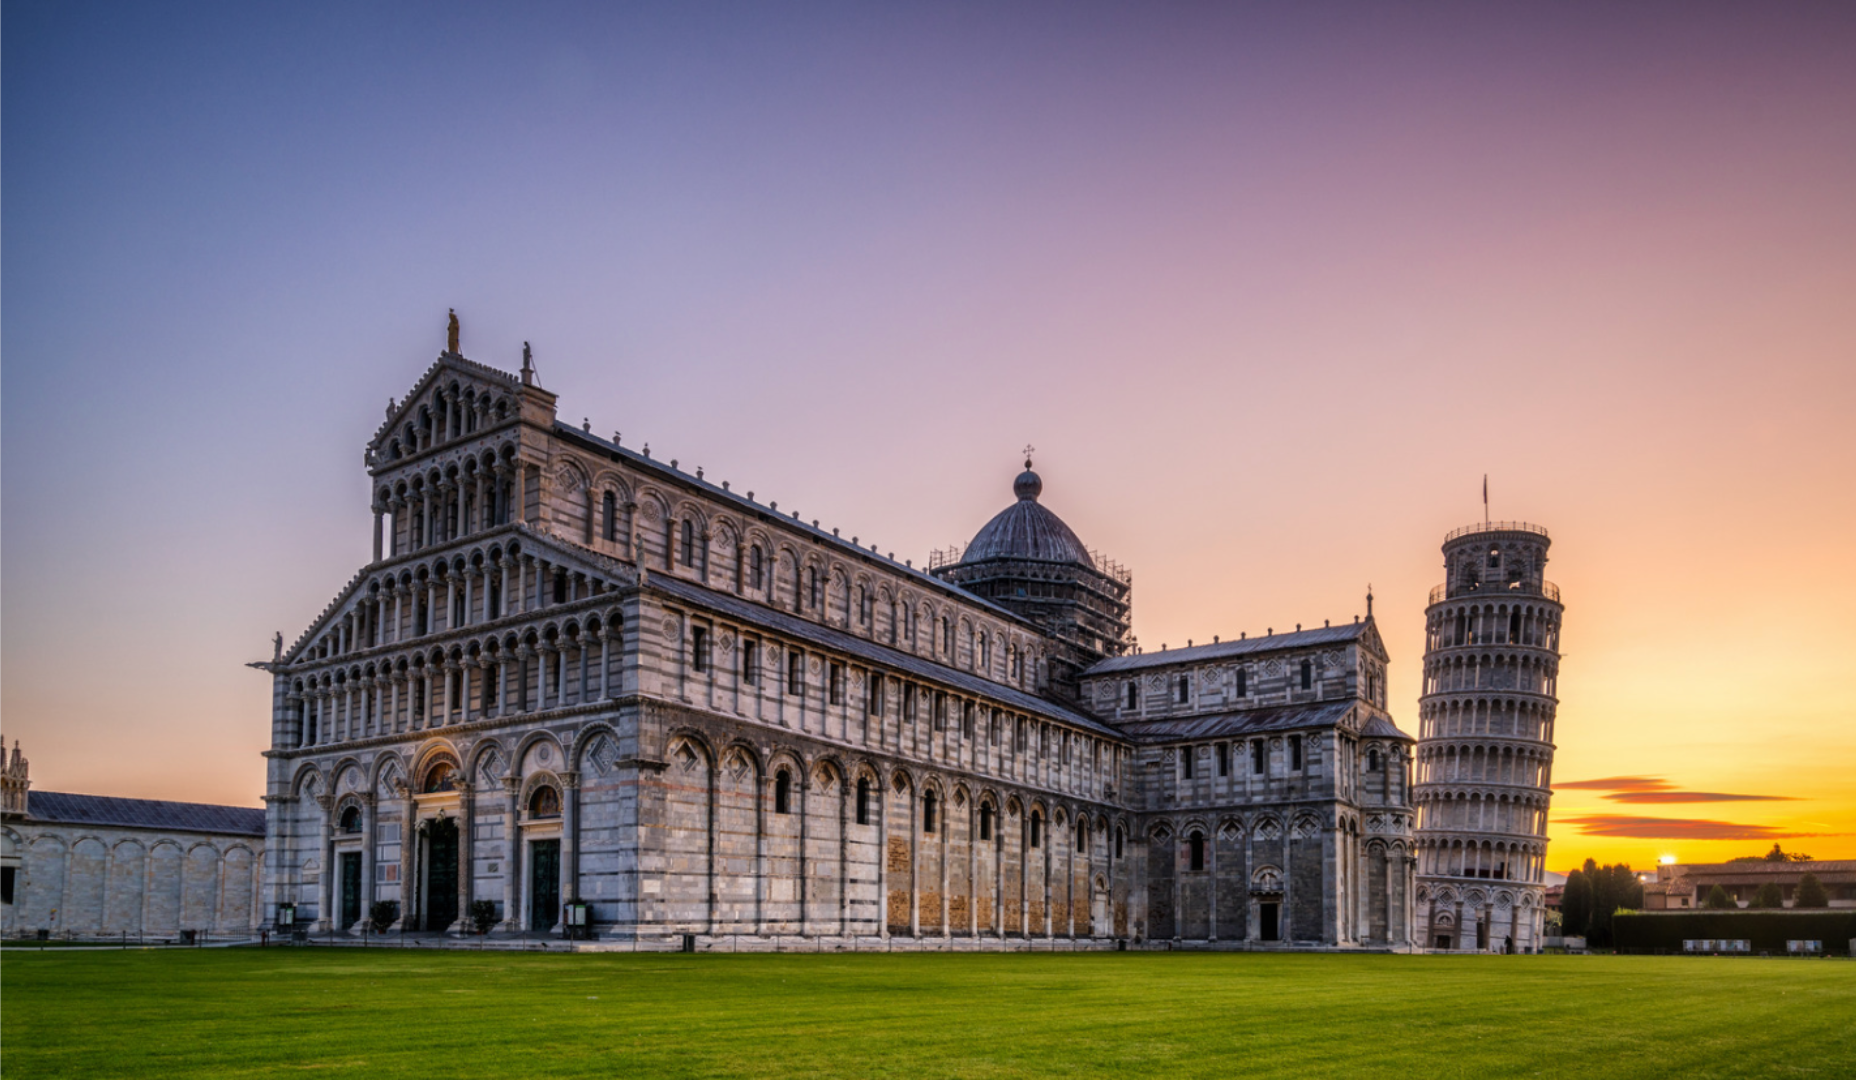 Featured image for “Pisa UNESCO World Heritage Site”